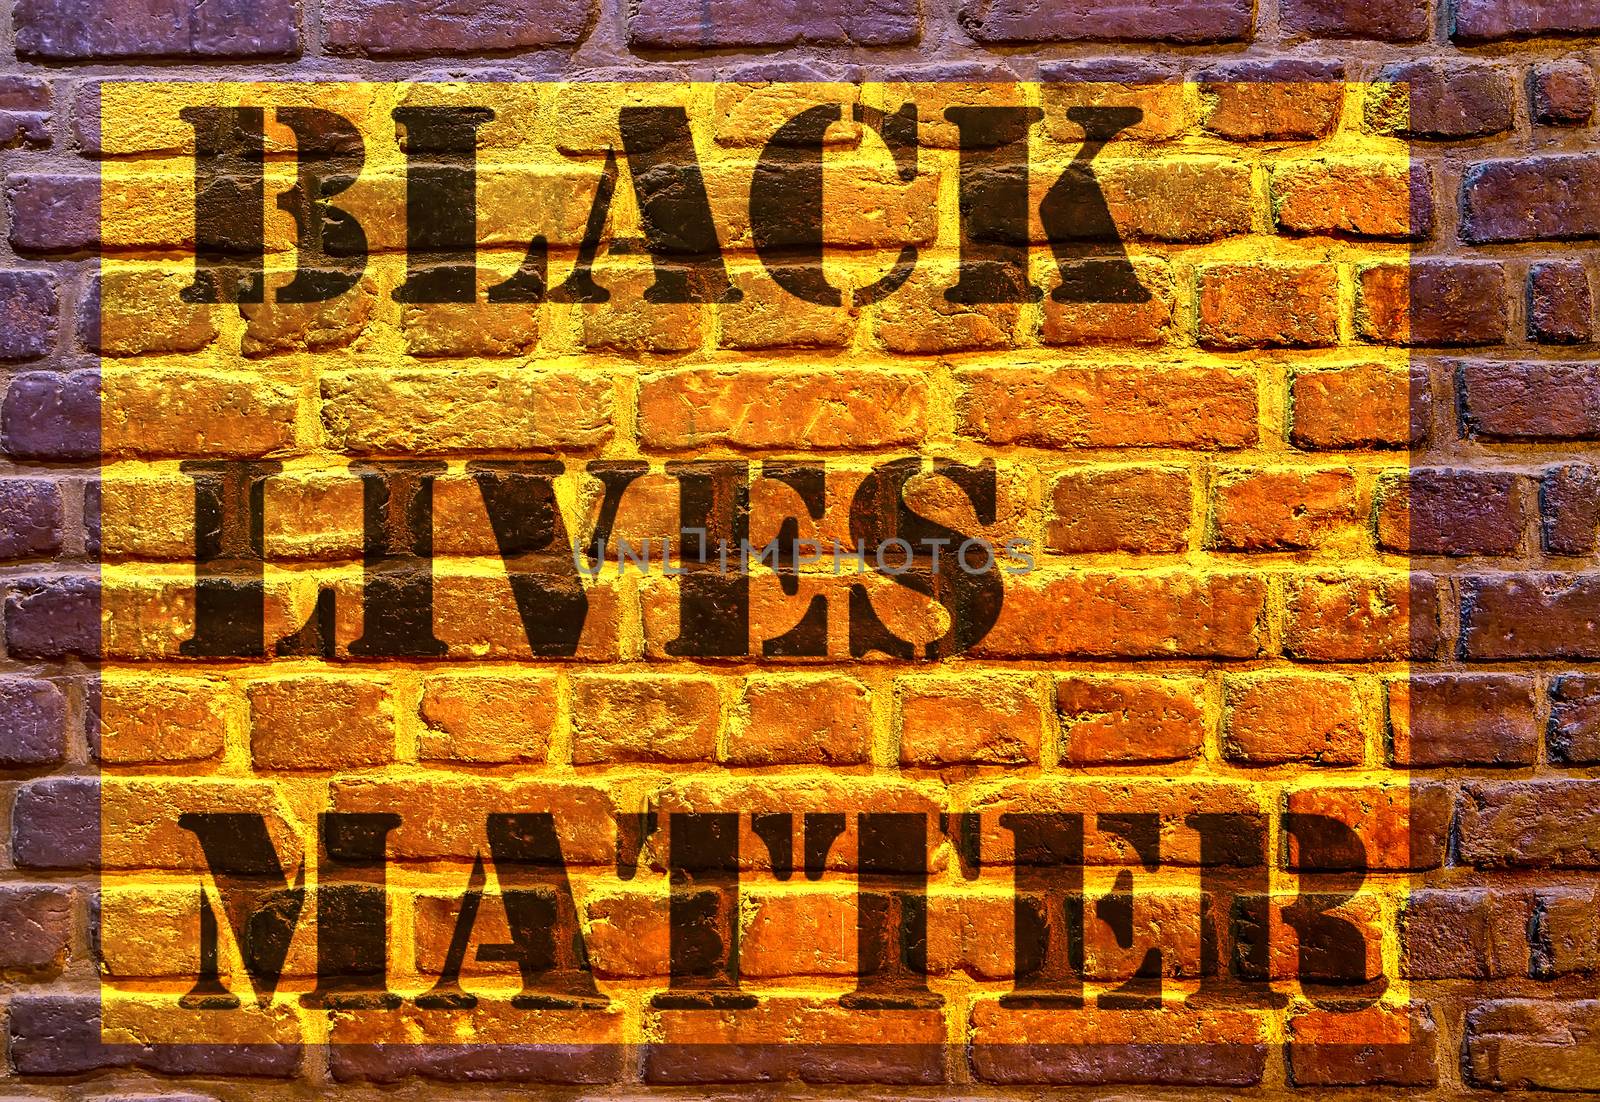 Black Lives Matter slogan liberation banner texture stone by Vladyslav